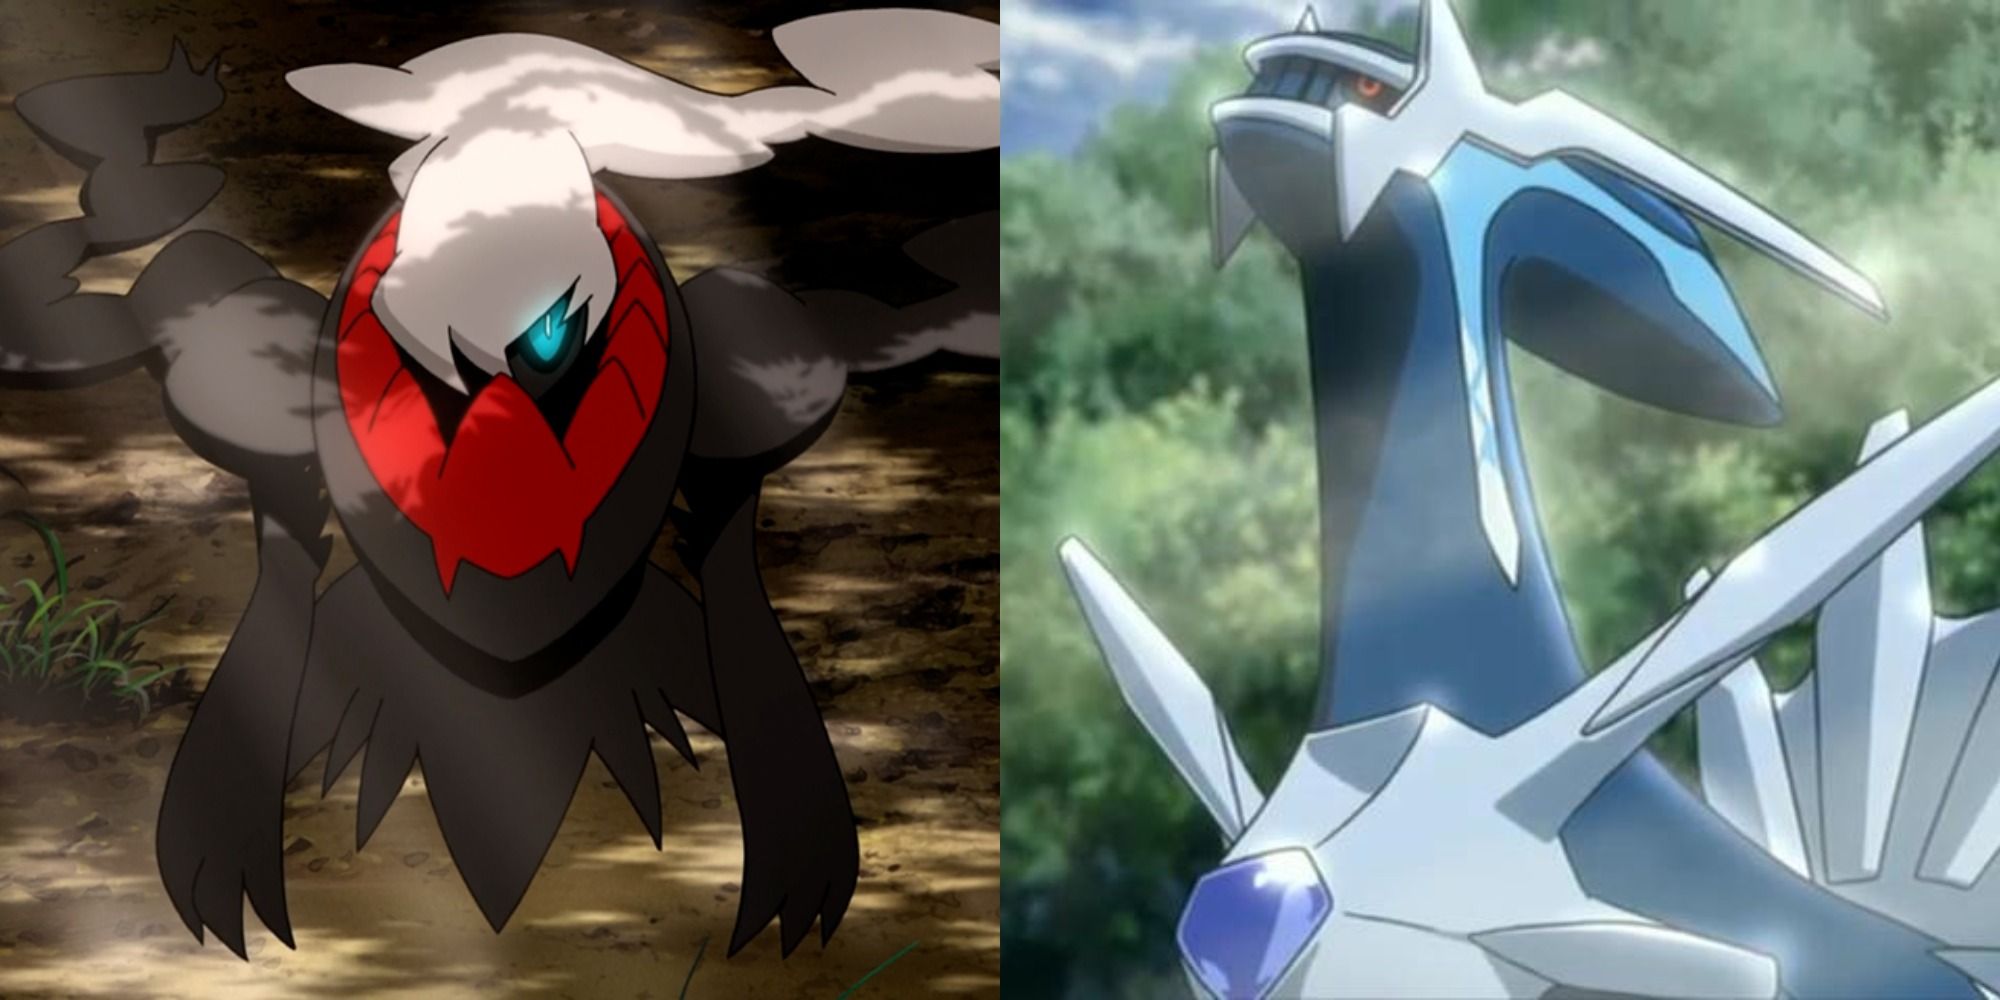 Split image showing Darkrai and Dialga in the Pokémon anime